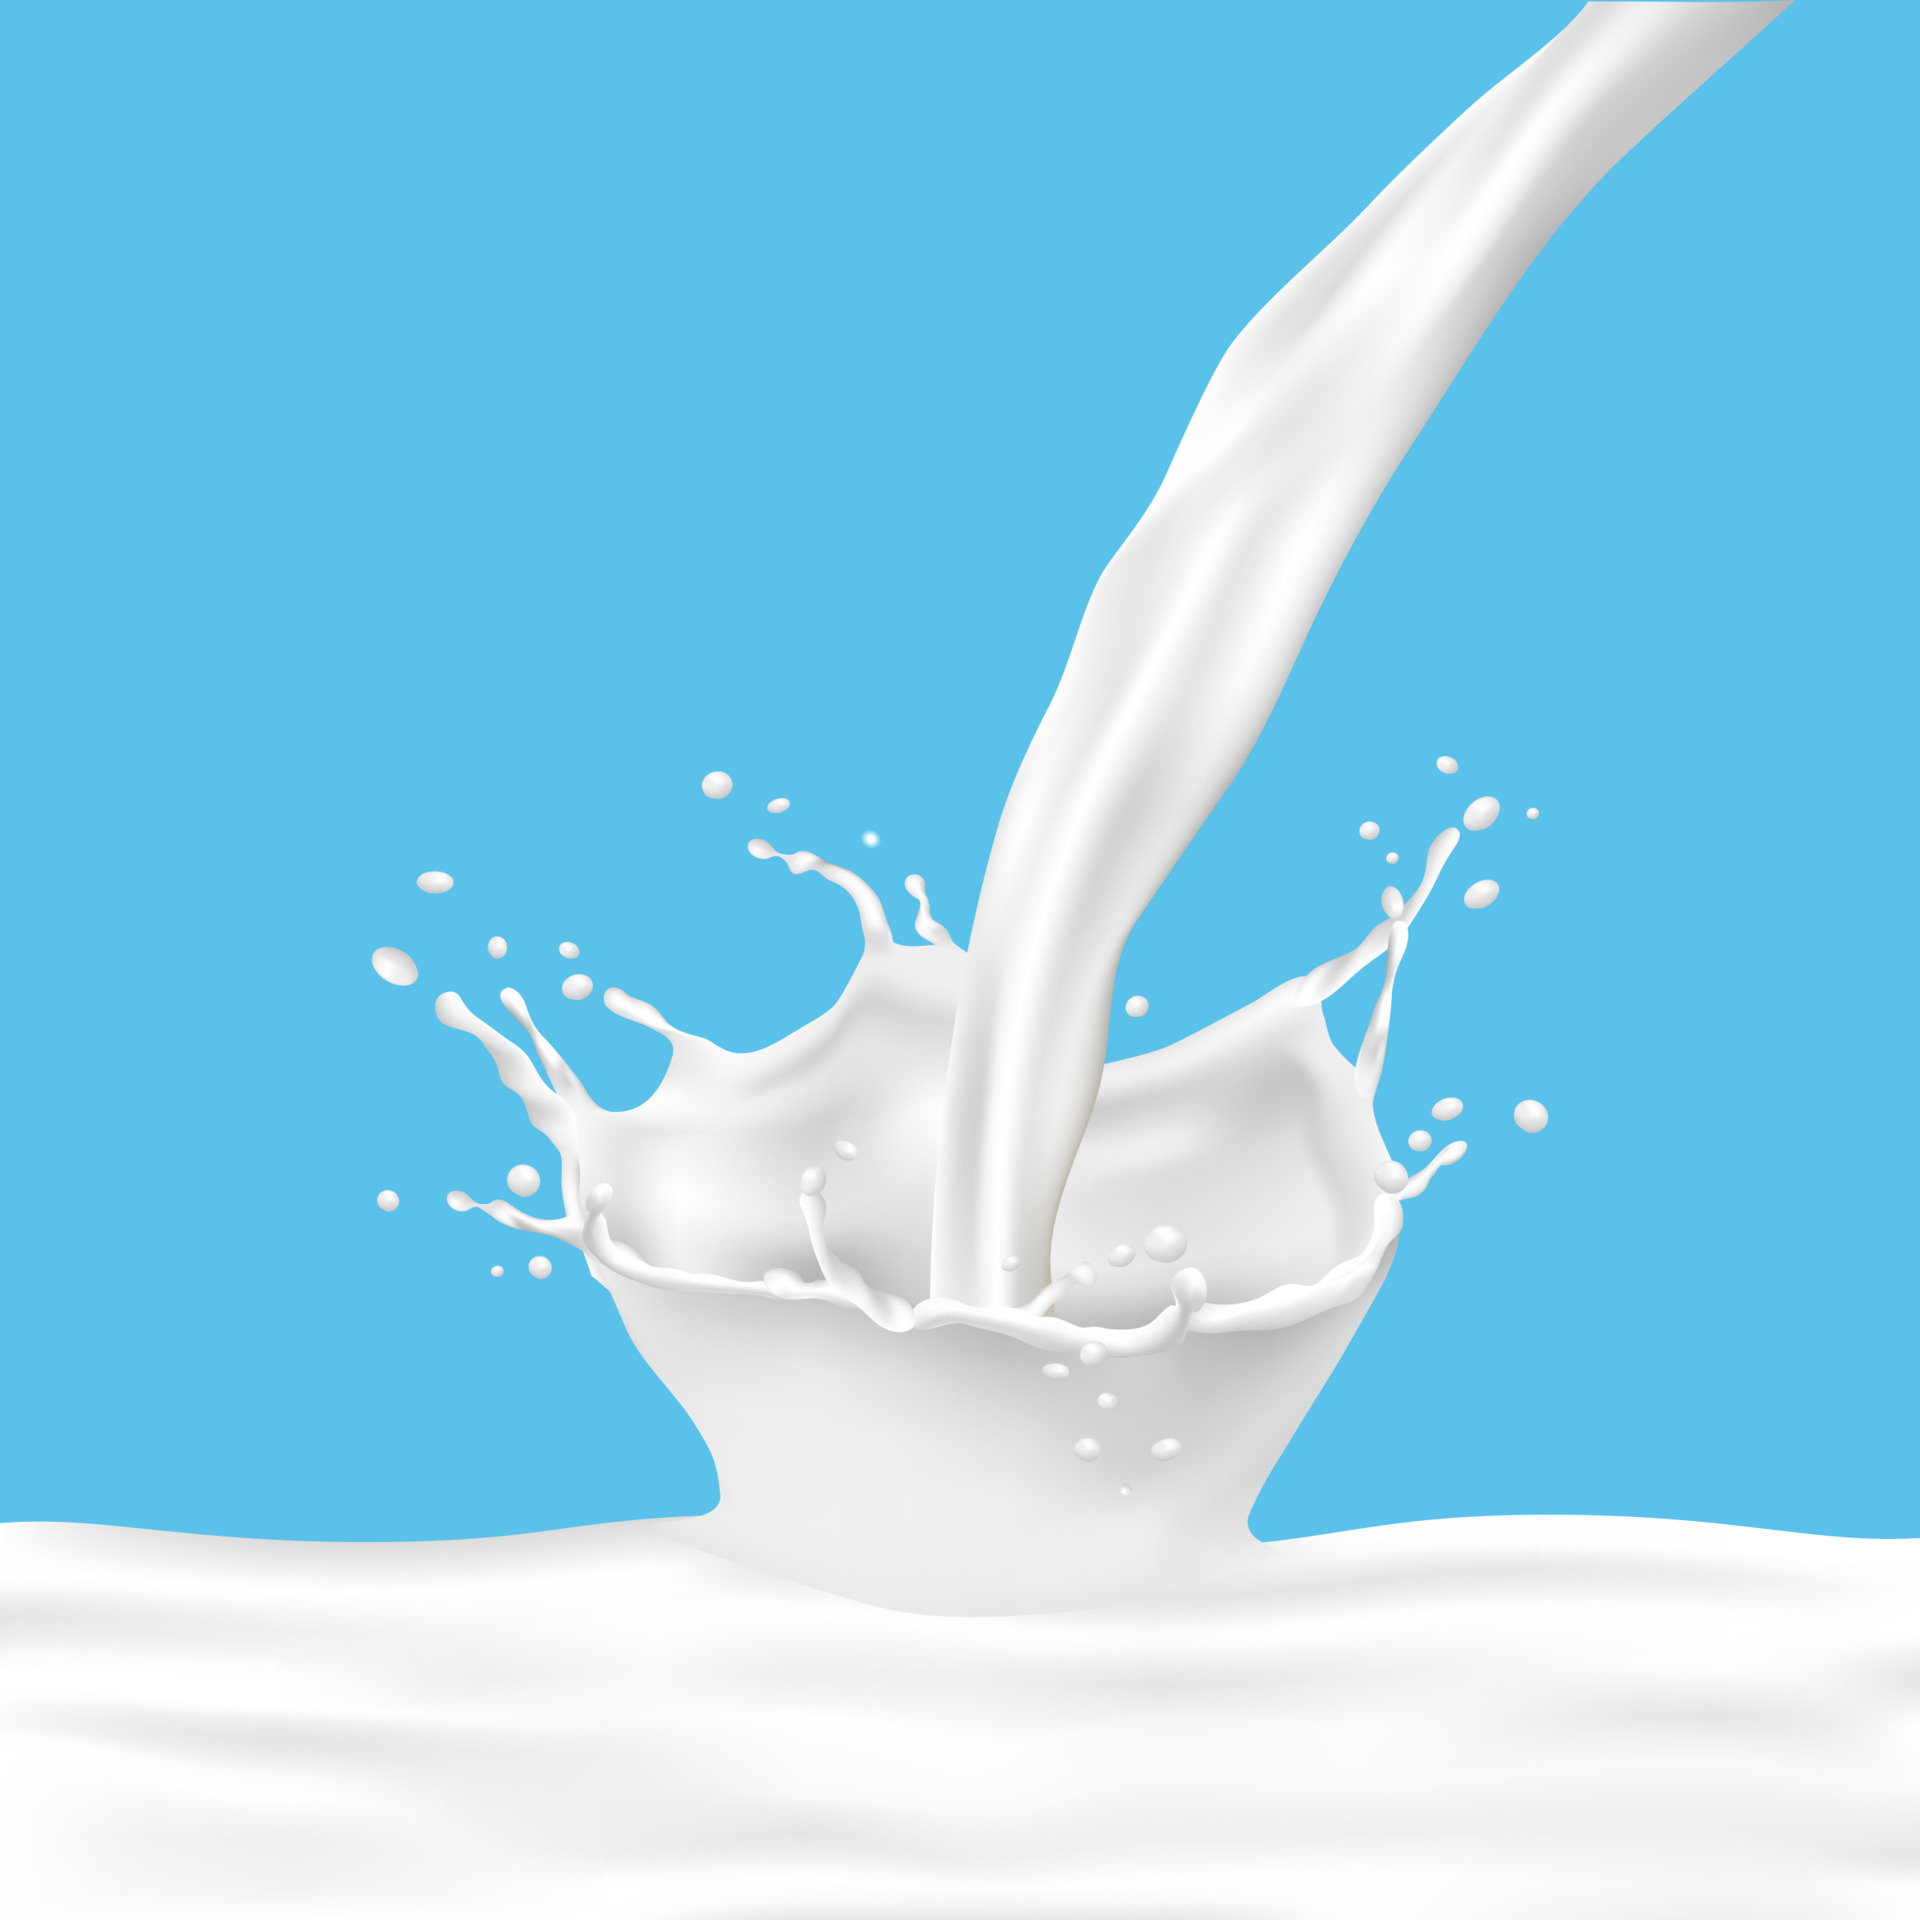 Milk splash with pouring milk on blue background